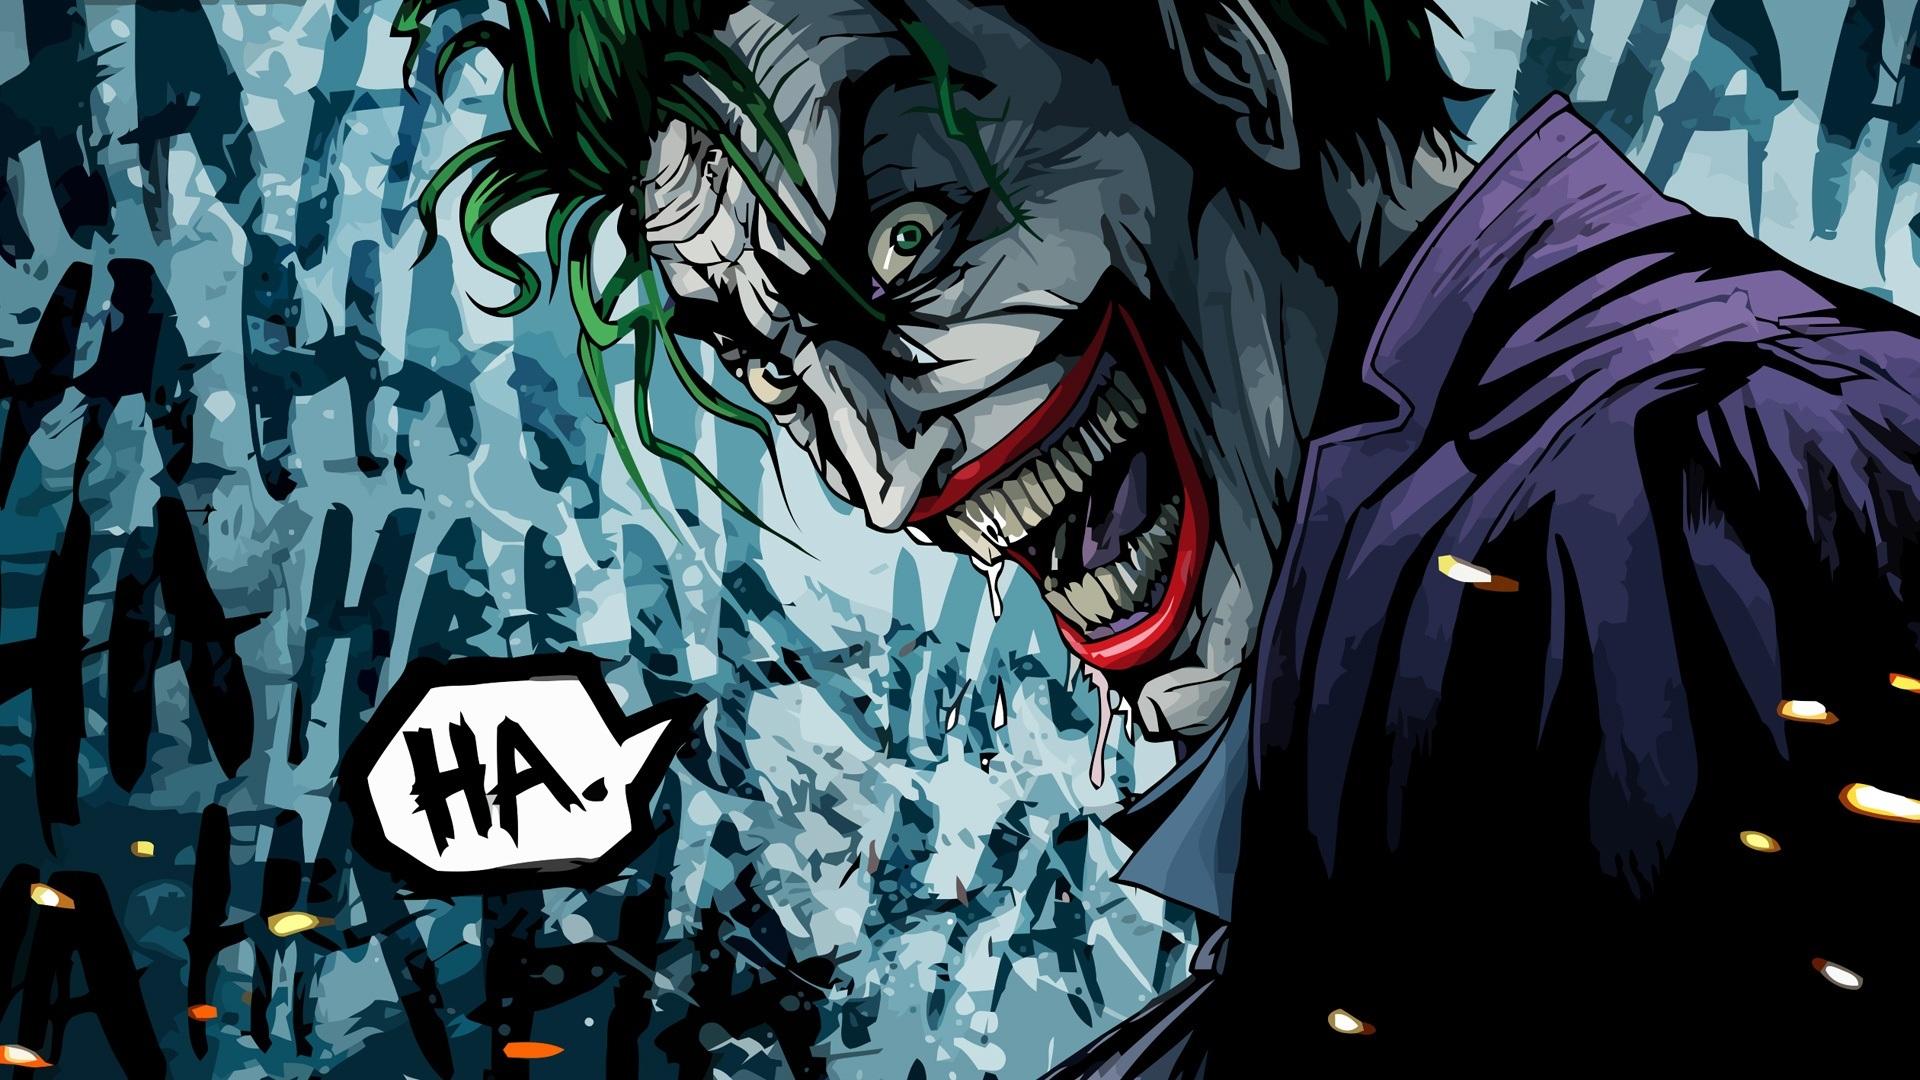 The Killing Joke Would Be The Source For Joker Origin Movie | Best Of Comic Books